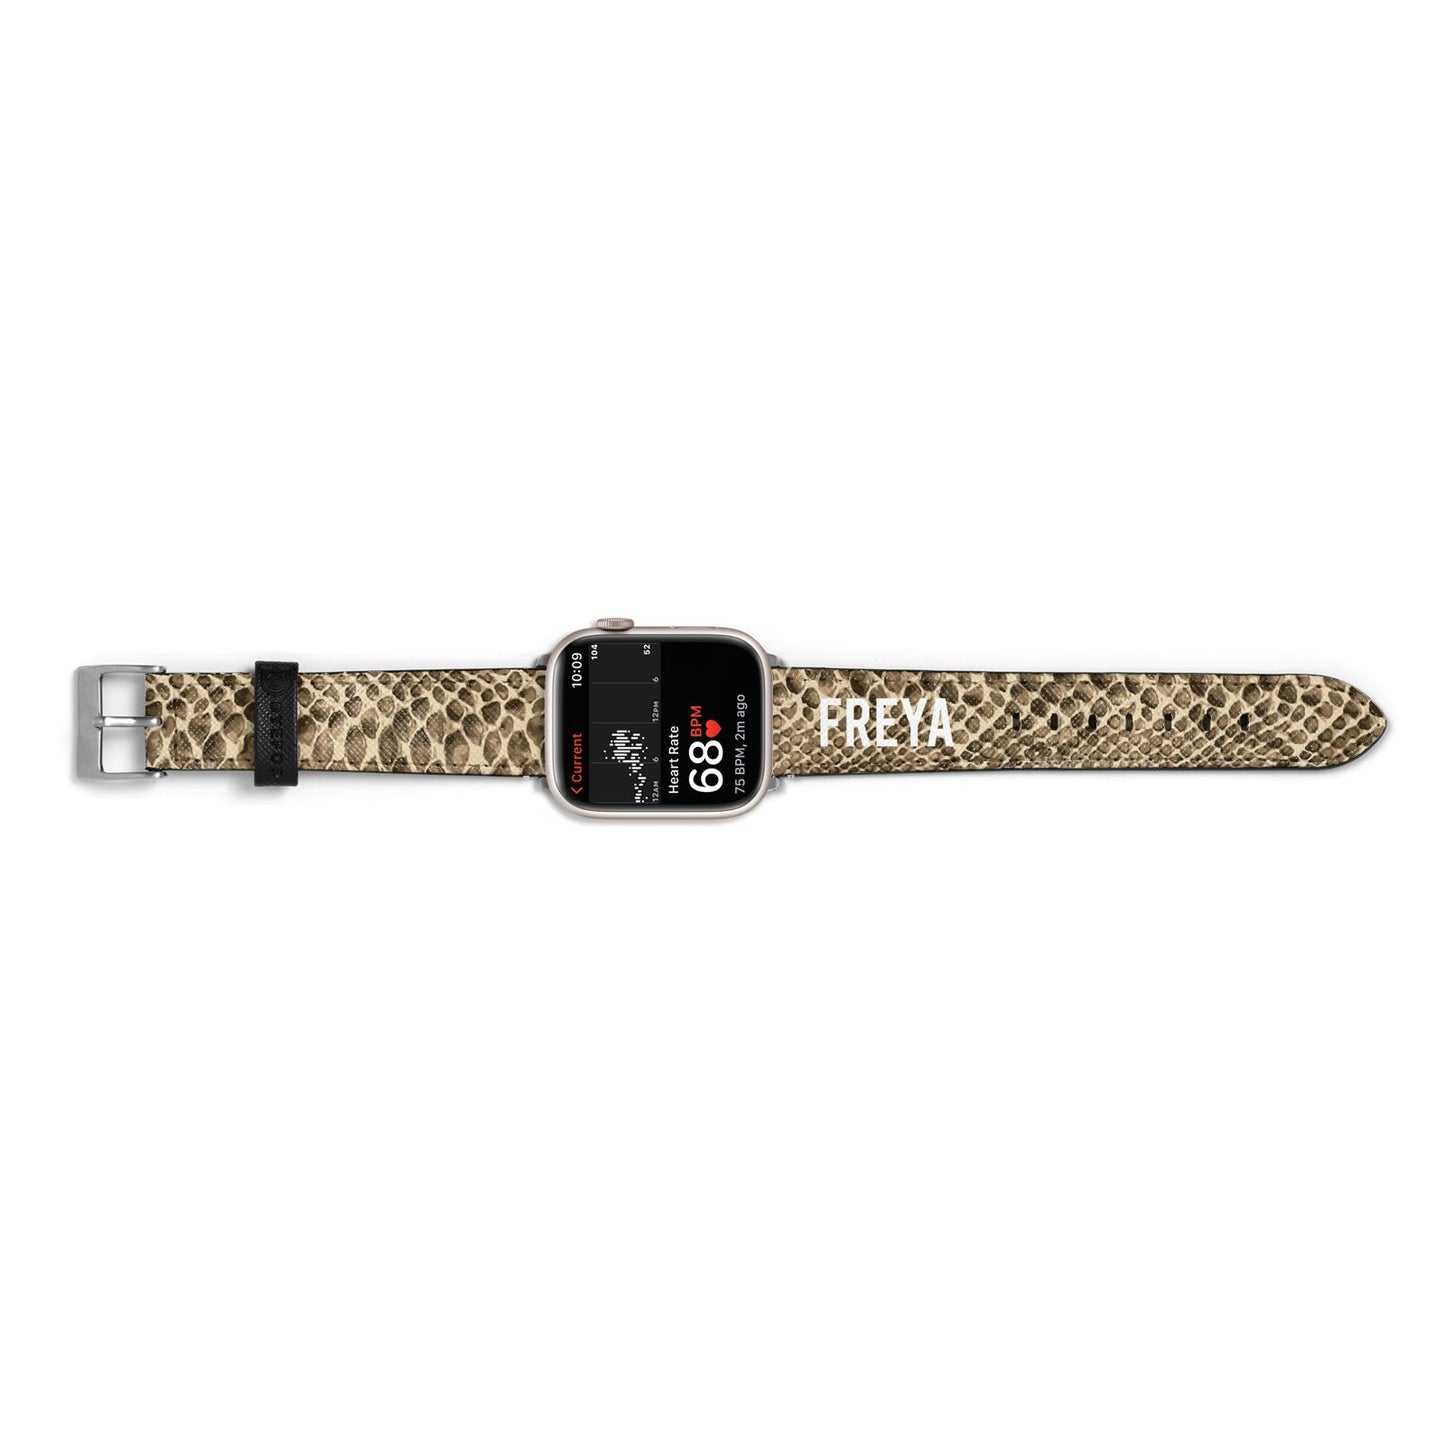 Personalised Tan Snakeskin Apple Watch Strap Size 38mm Landscape Image Silver Hardware